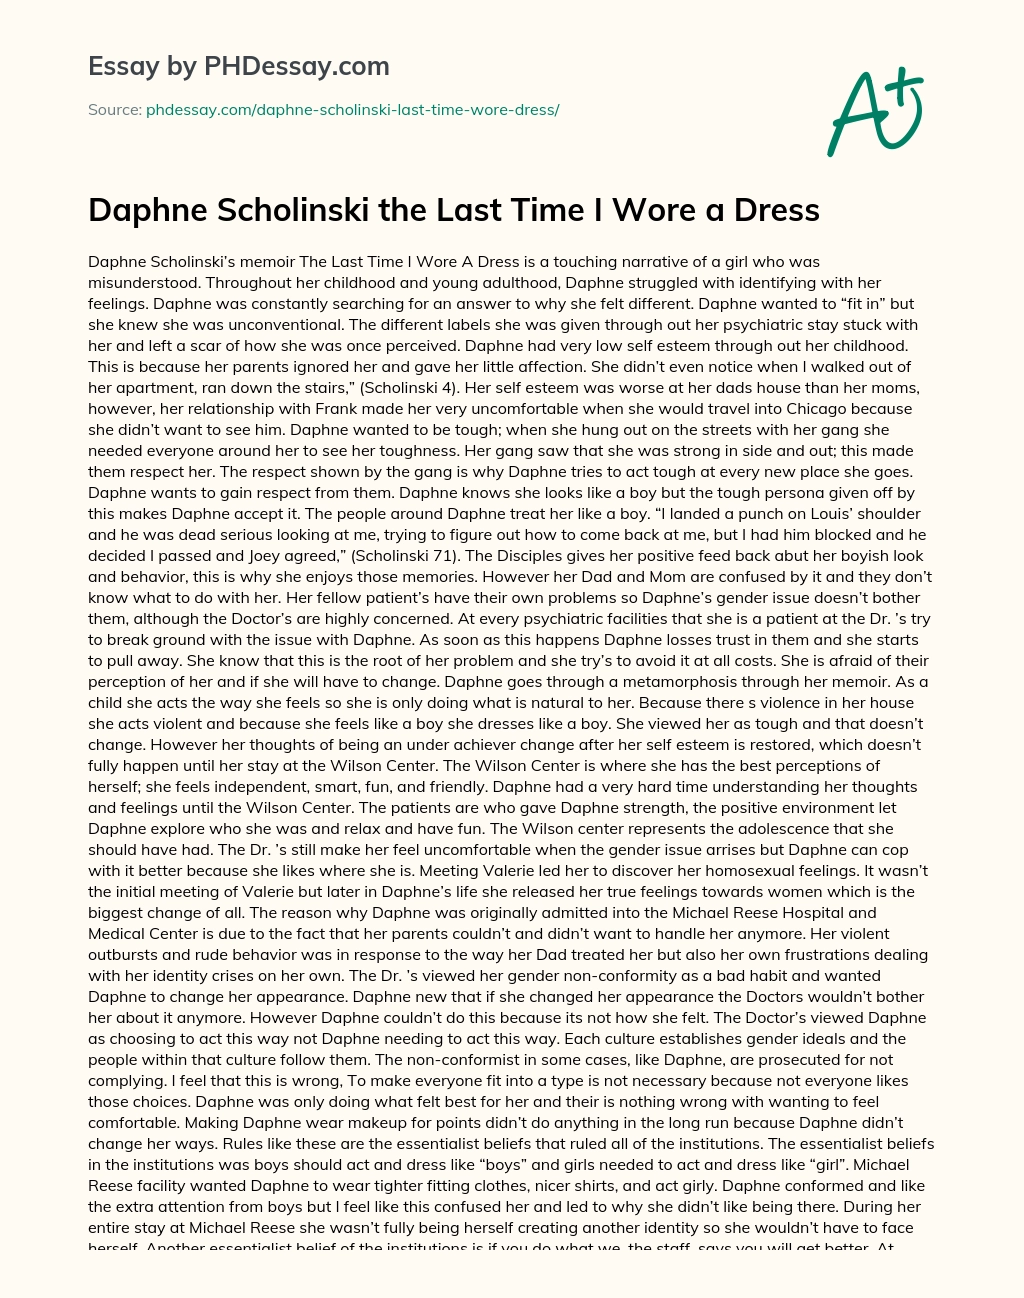 Daphne Scholinski the Last Time I Wore a Dress essay